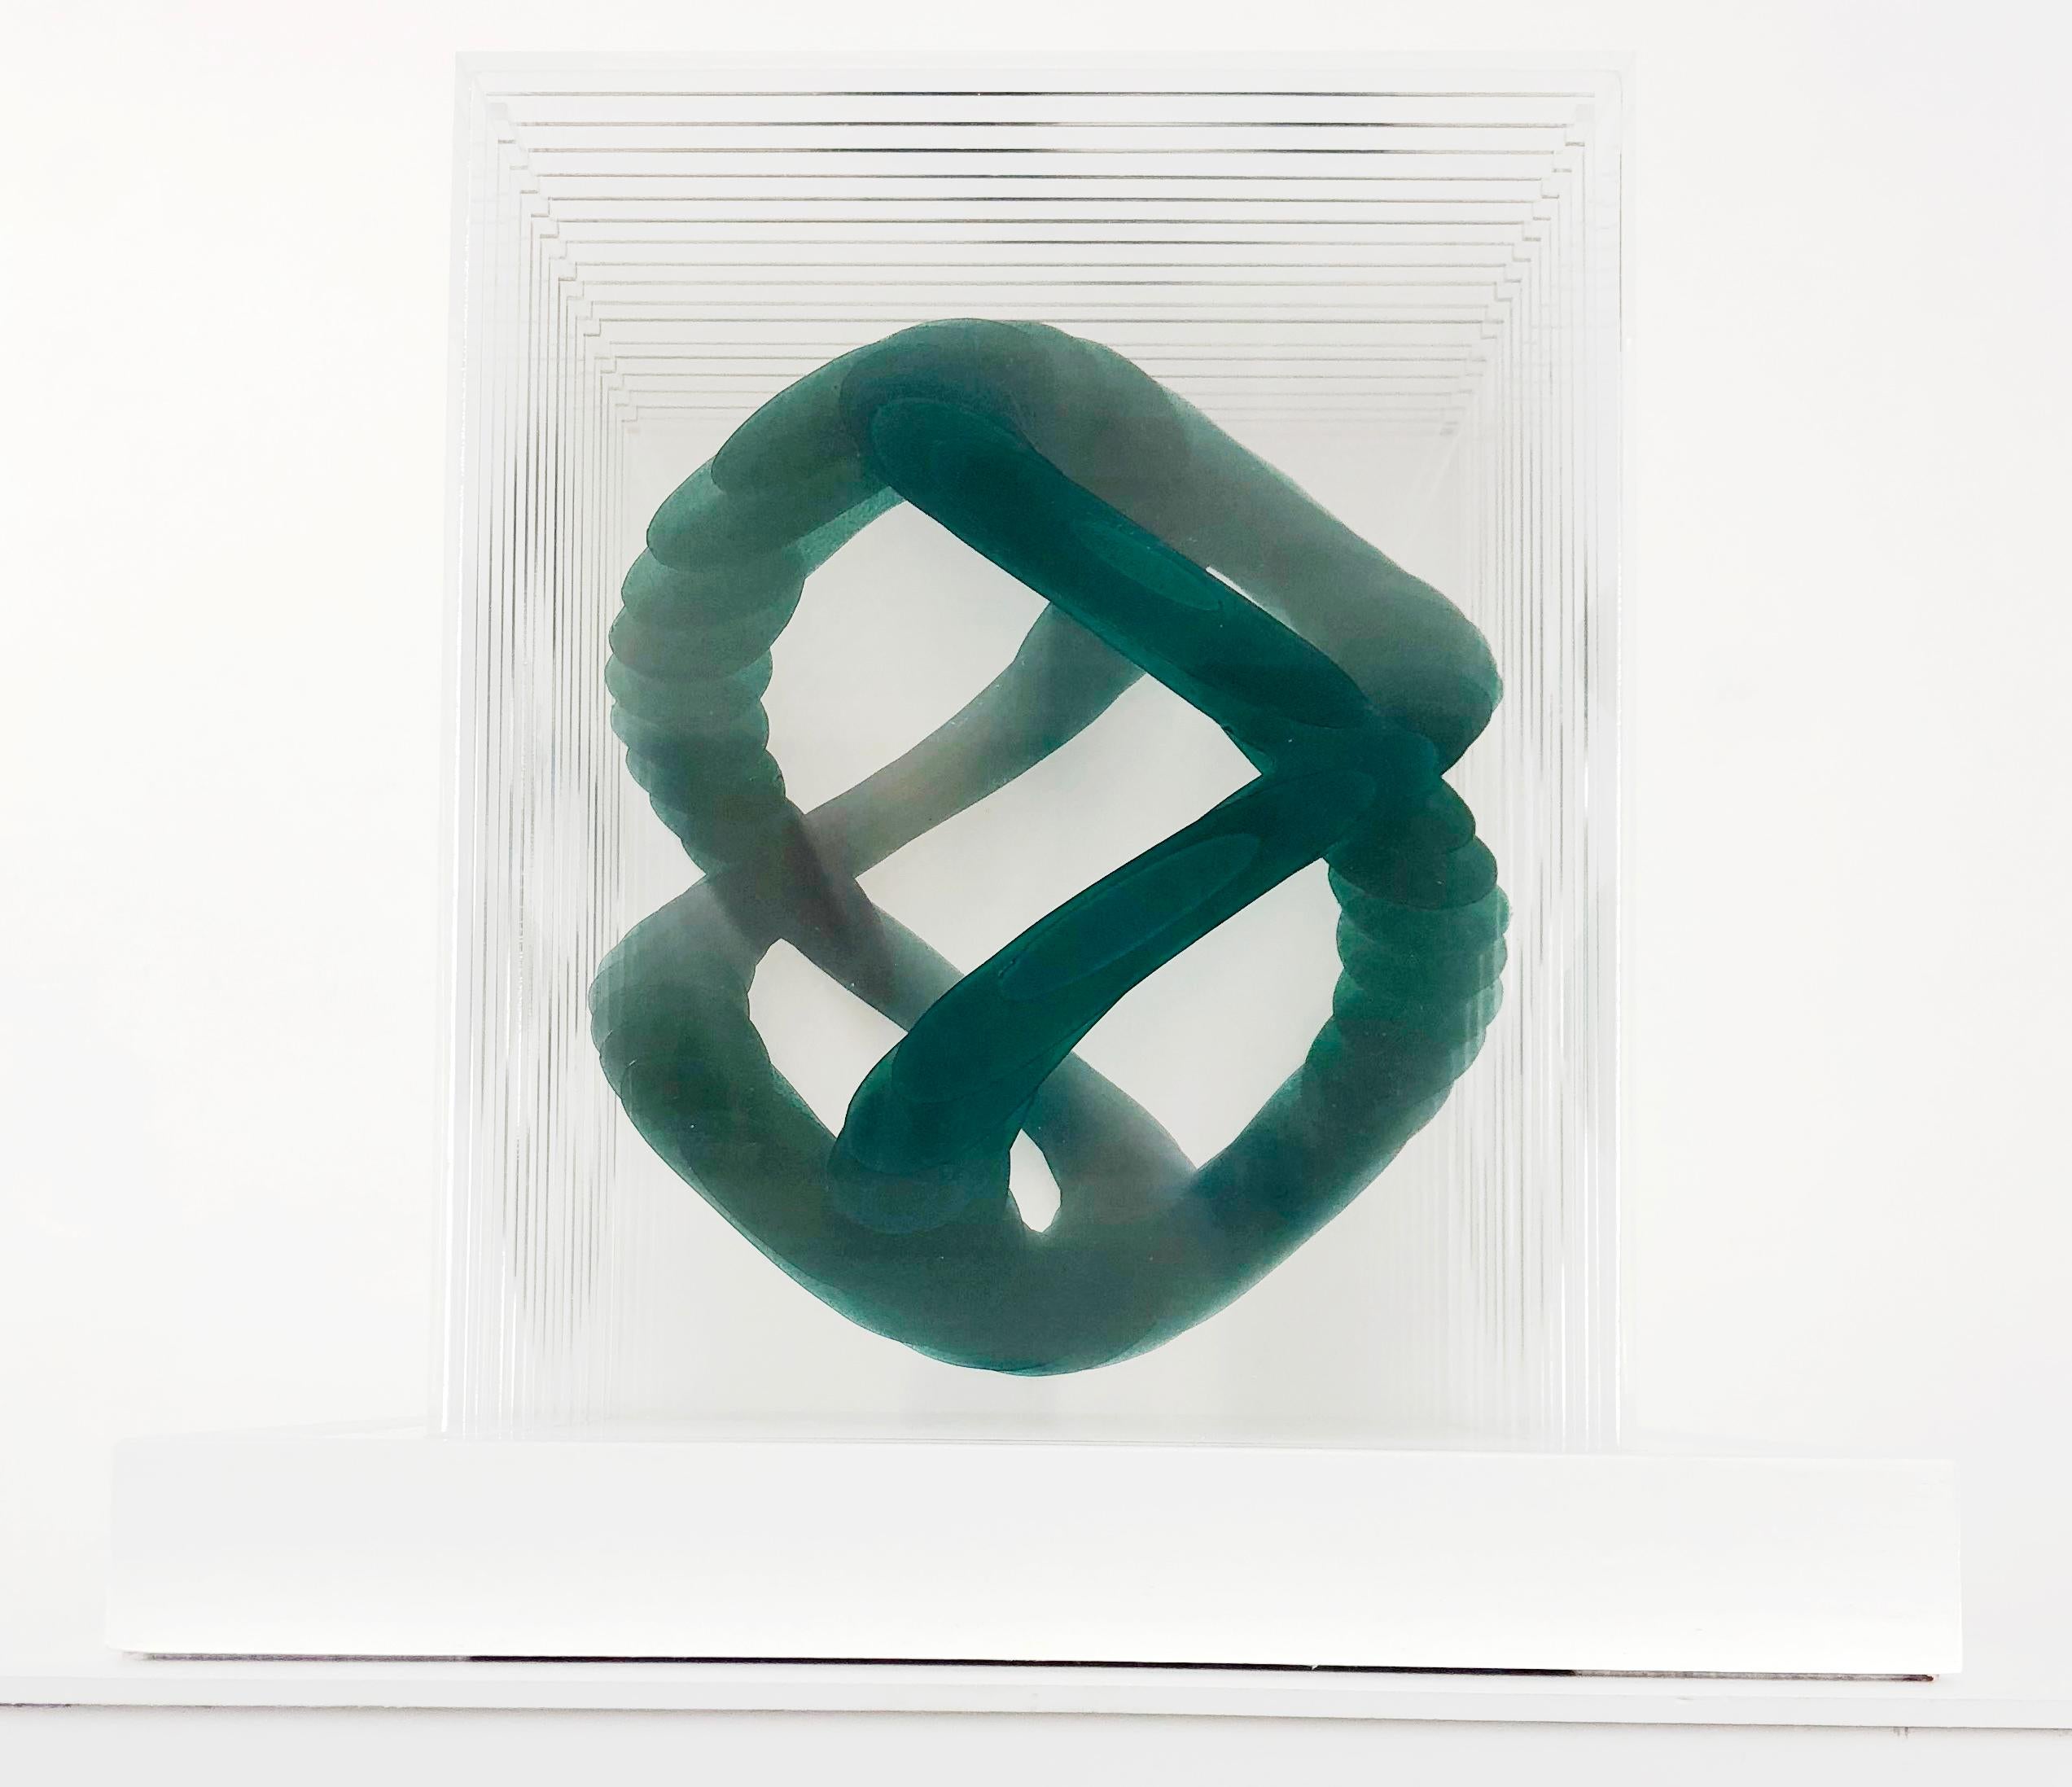 Two Cubed - Sculpture by Claire Cohen